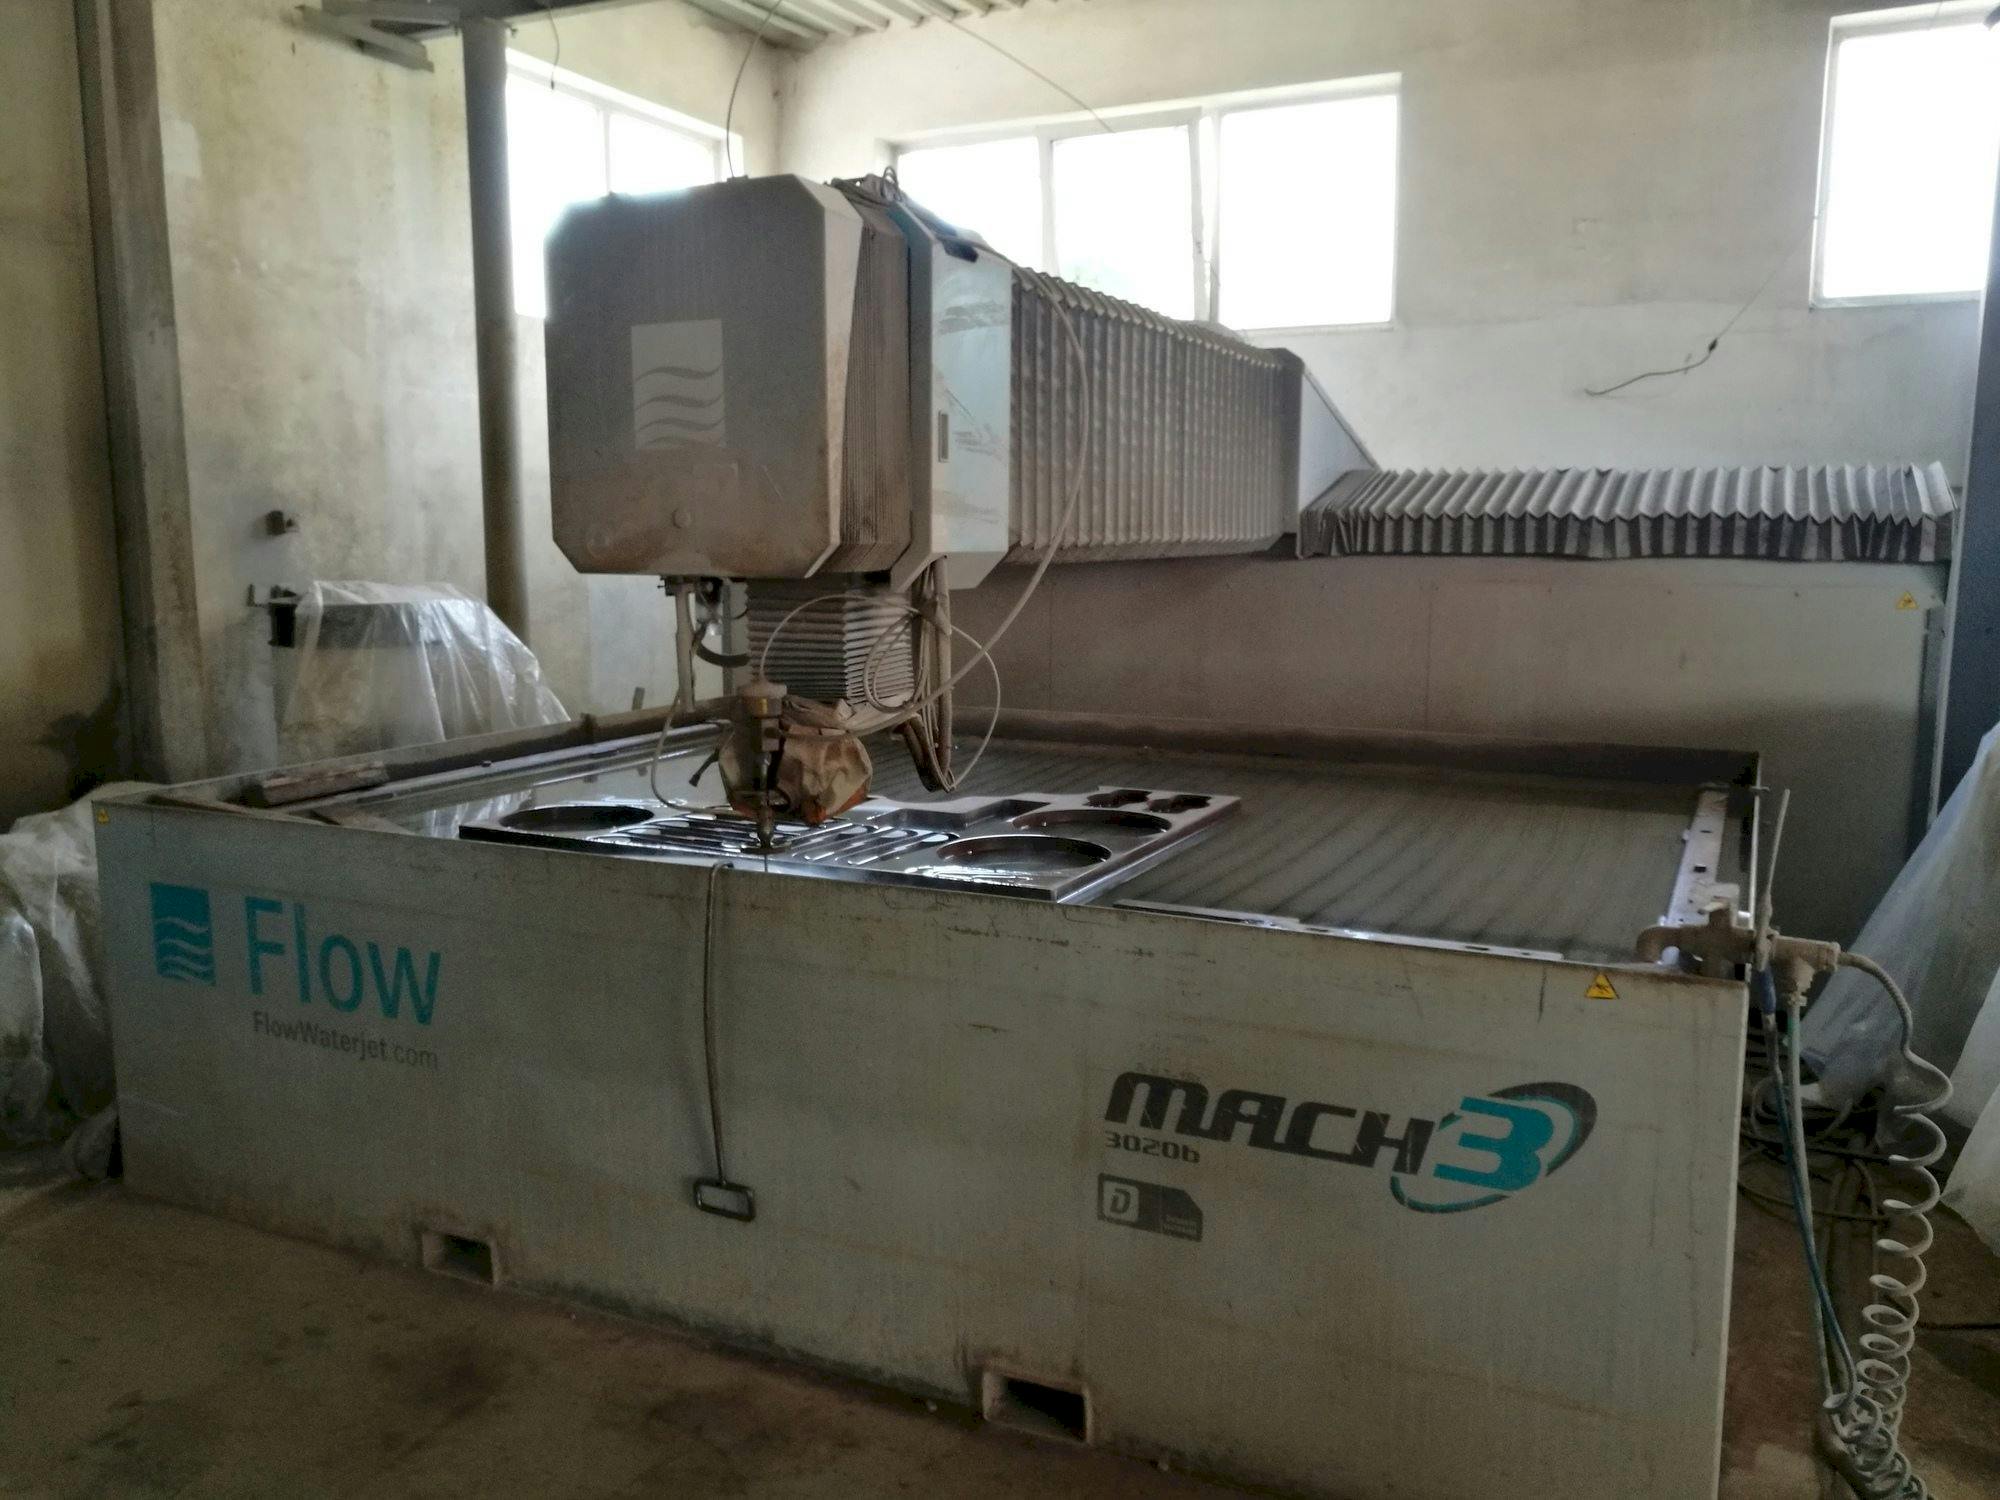 Masina Flow Mach3-3020b   eestvaade